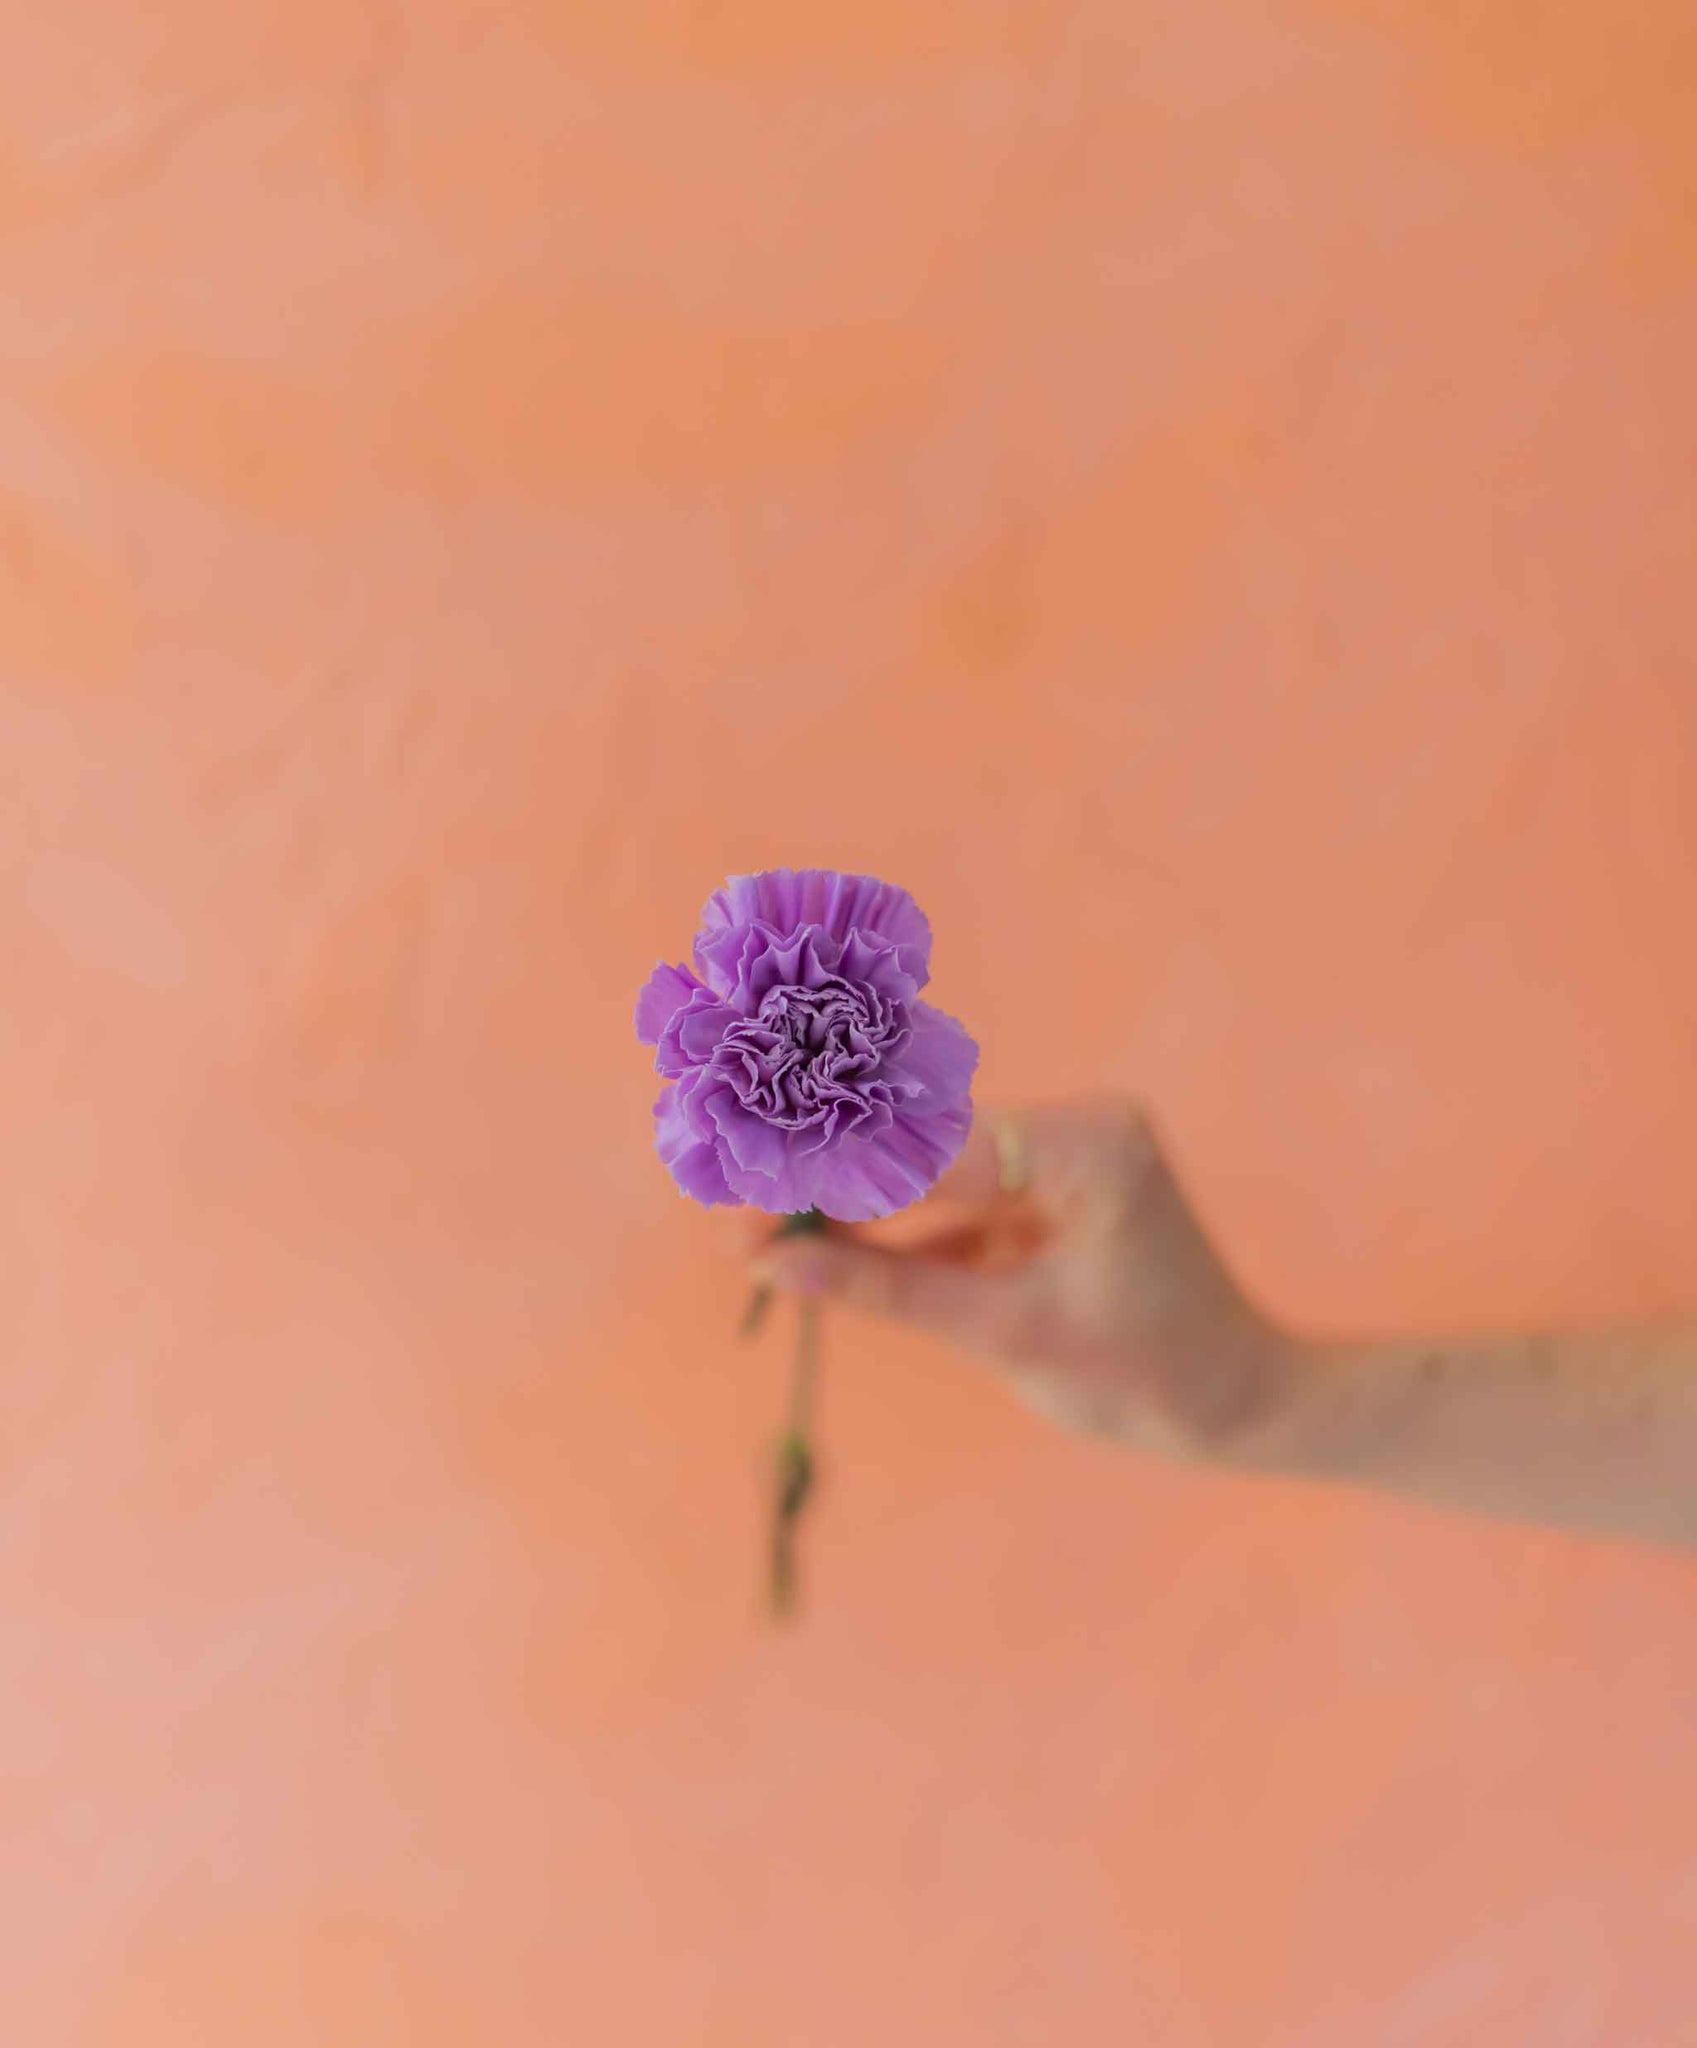 A purple carnation against a peach backdrop